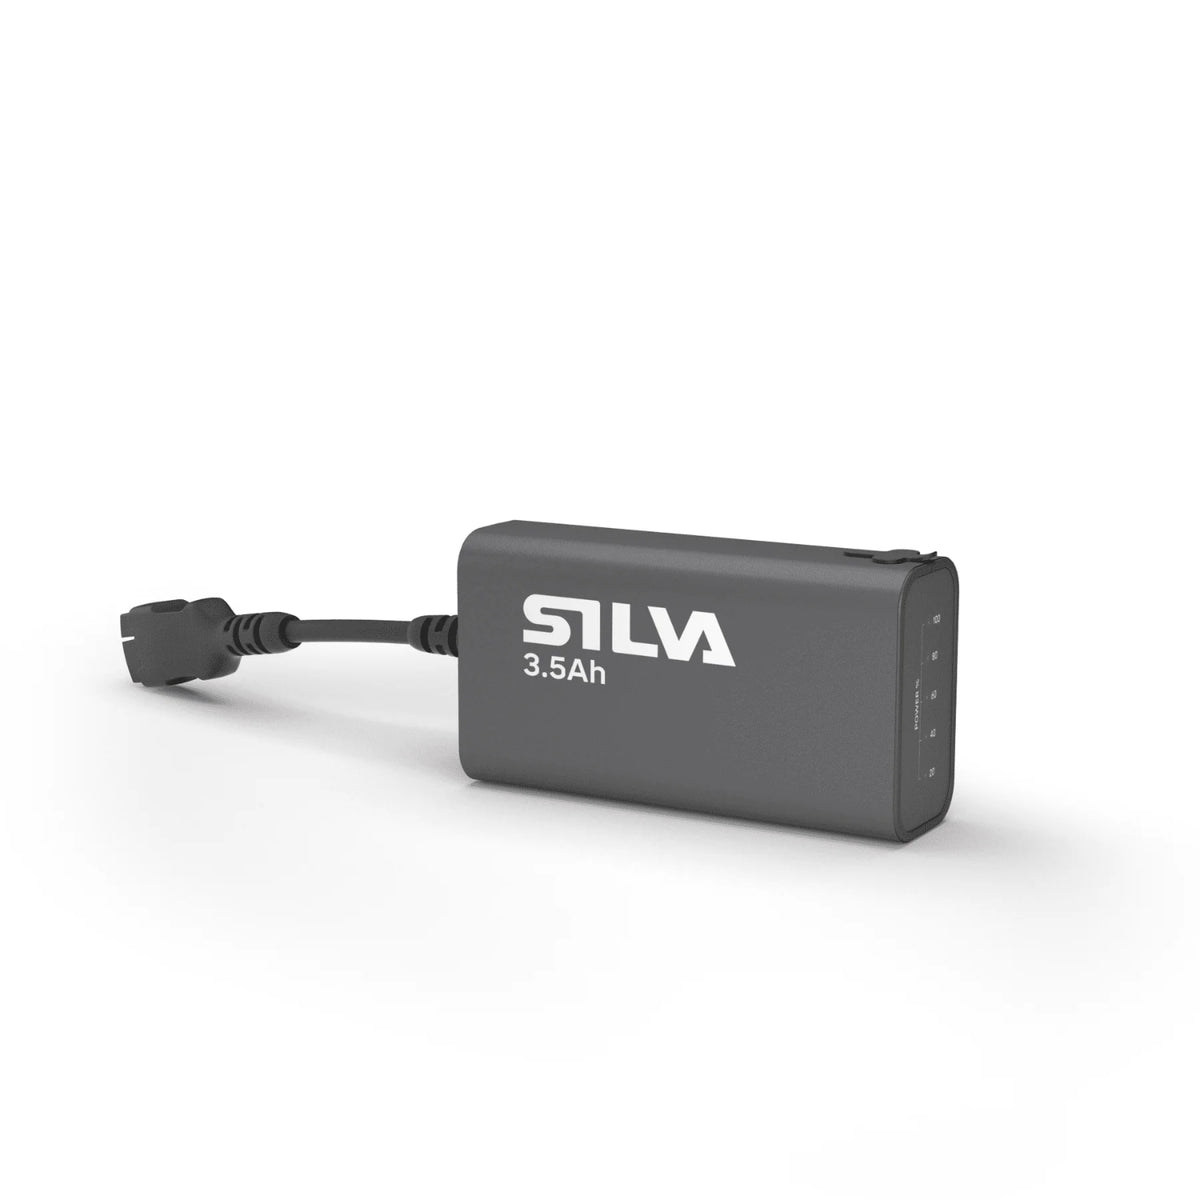 Silva Headlamp Battery 3.5Ah (25.9 Wh)